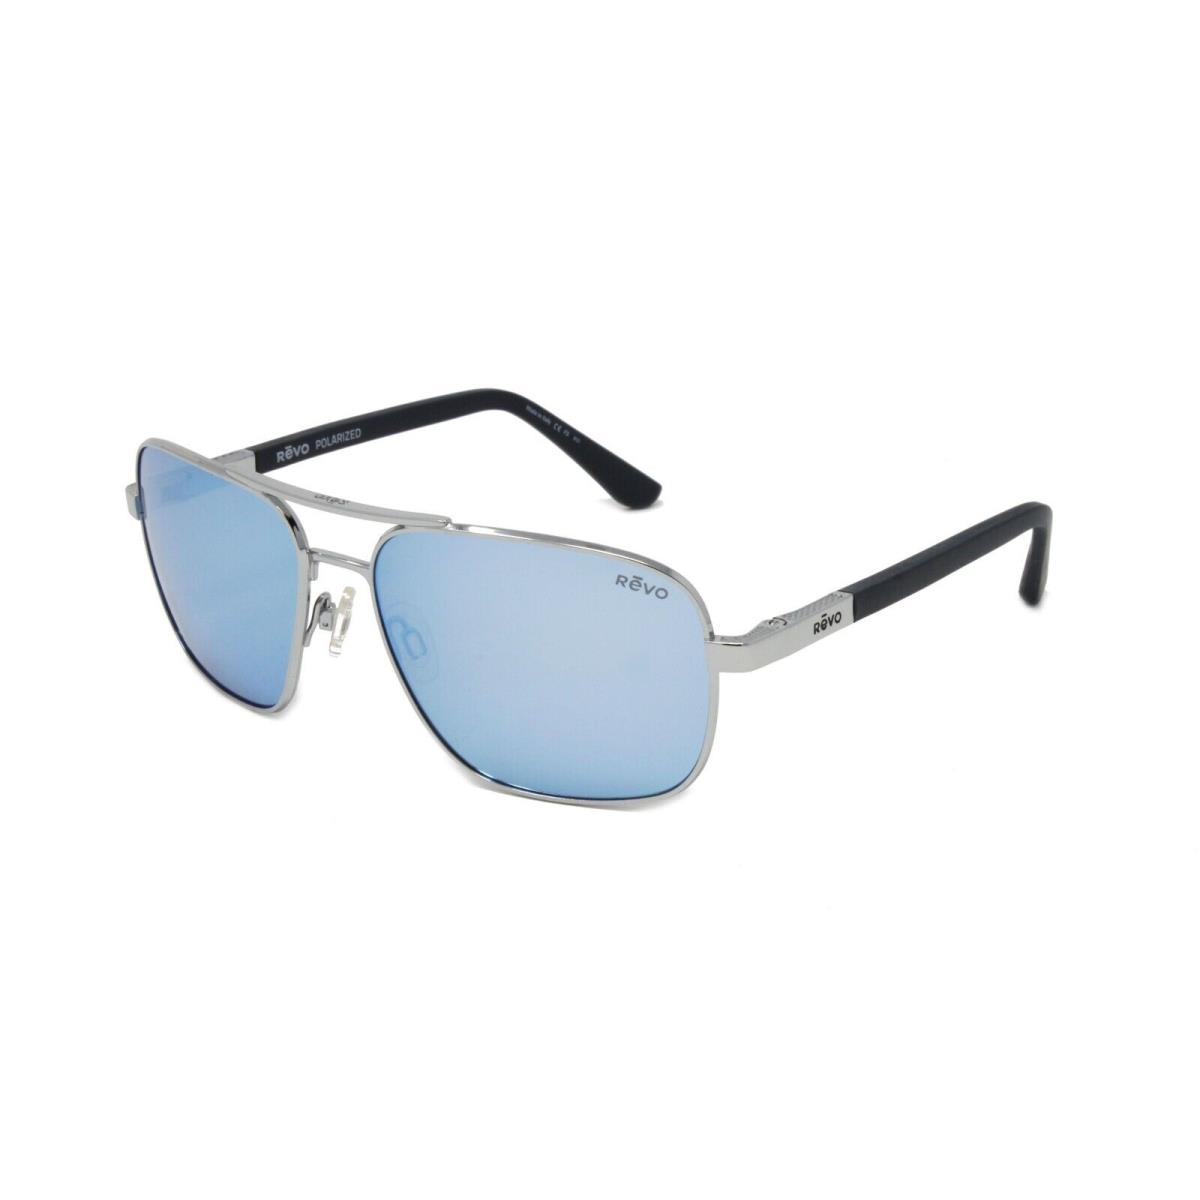 Revo Sunglasses Freeman RE1012 03 BL Chrome Blue Water Polarized Lens 46mm - Frame: Silver, Lens: Blue